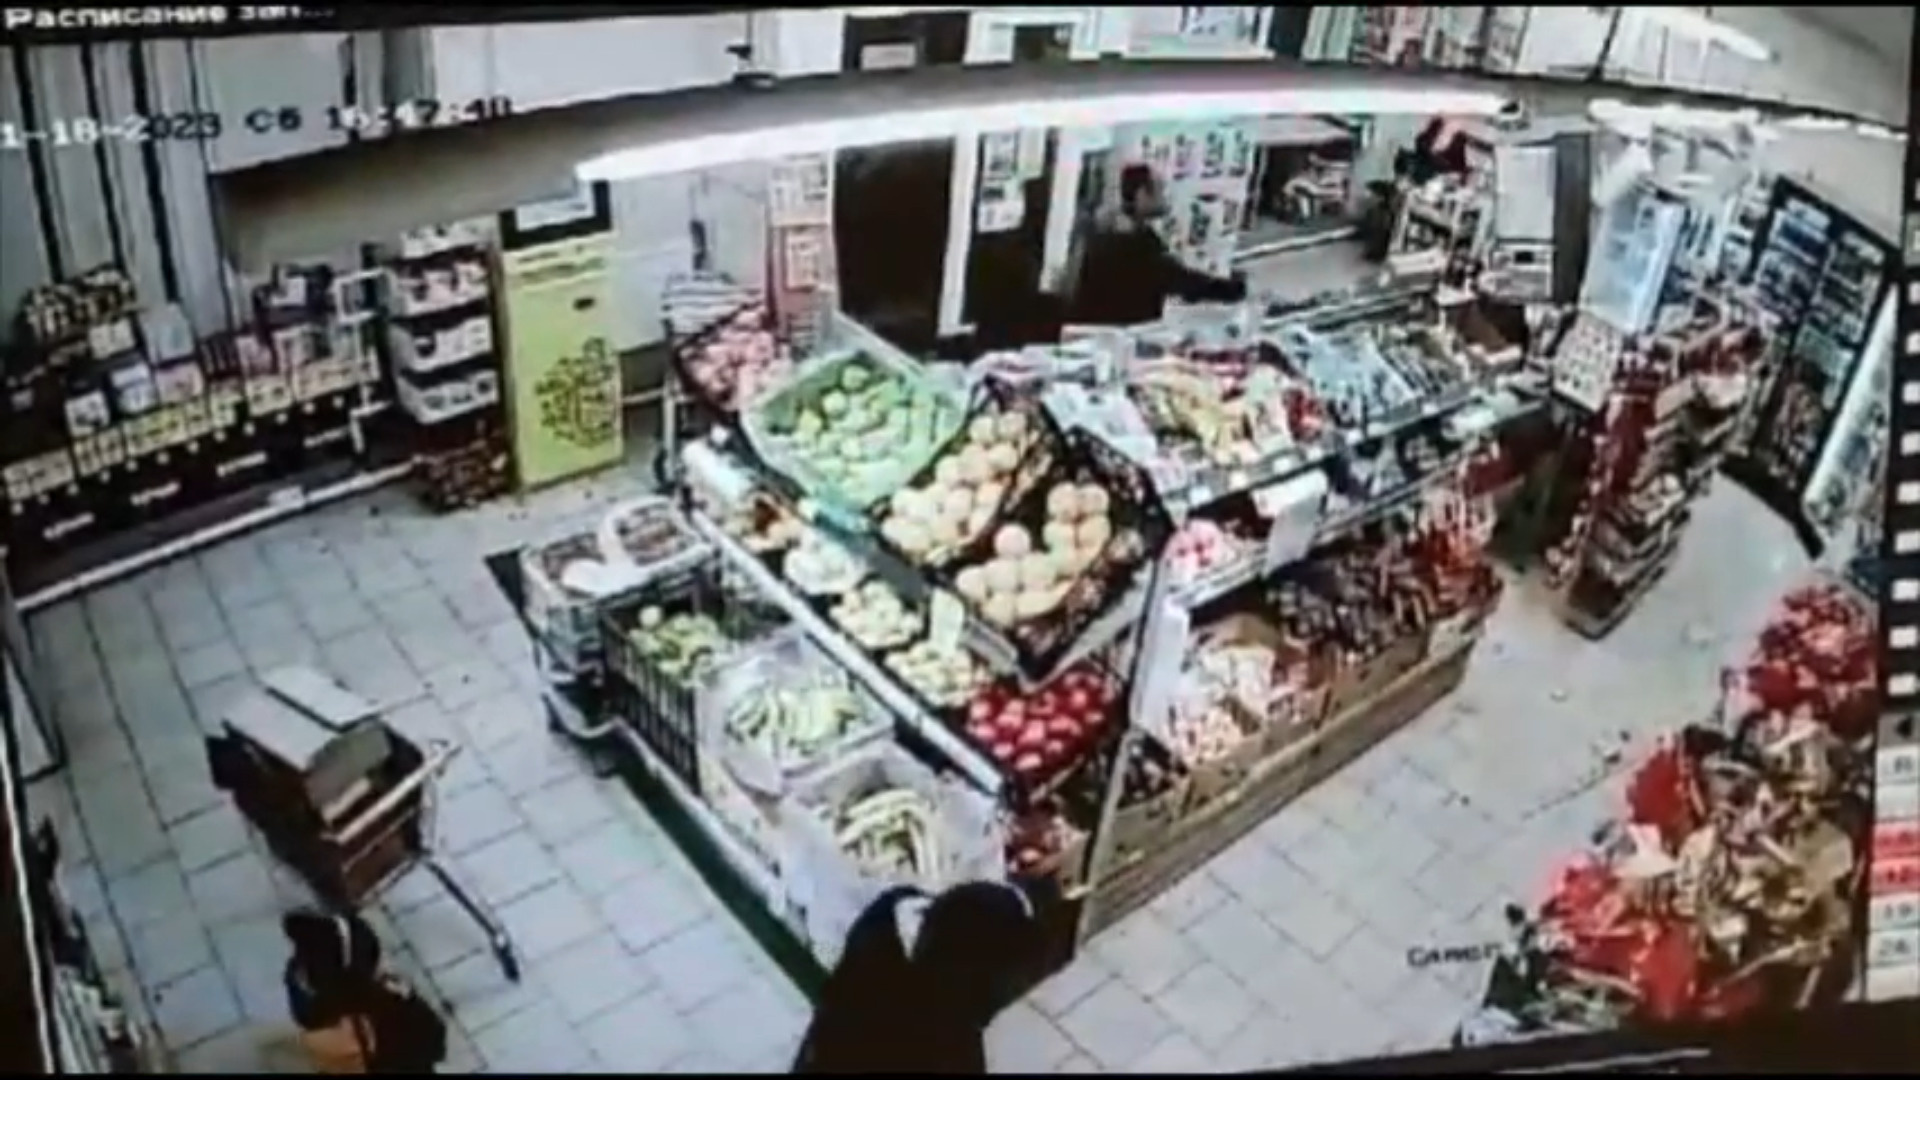 Камера сняла бомбардировку овощами в супермаркете на Шкапина. Начало ей положил удар в горло